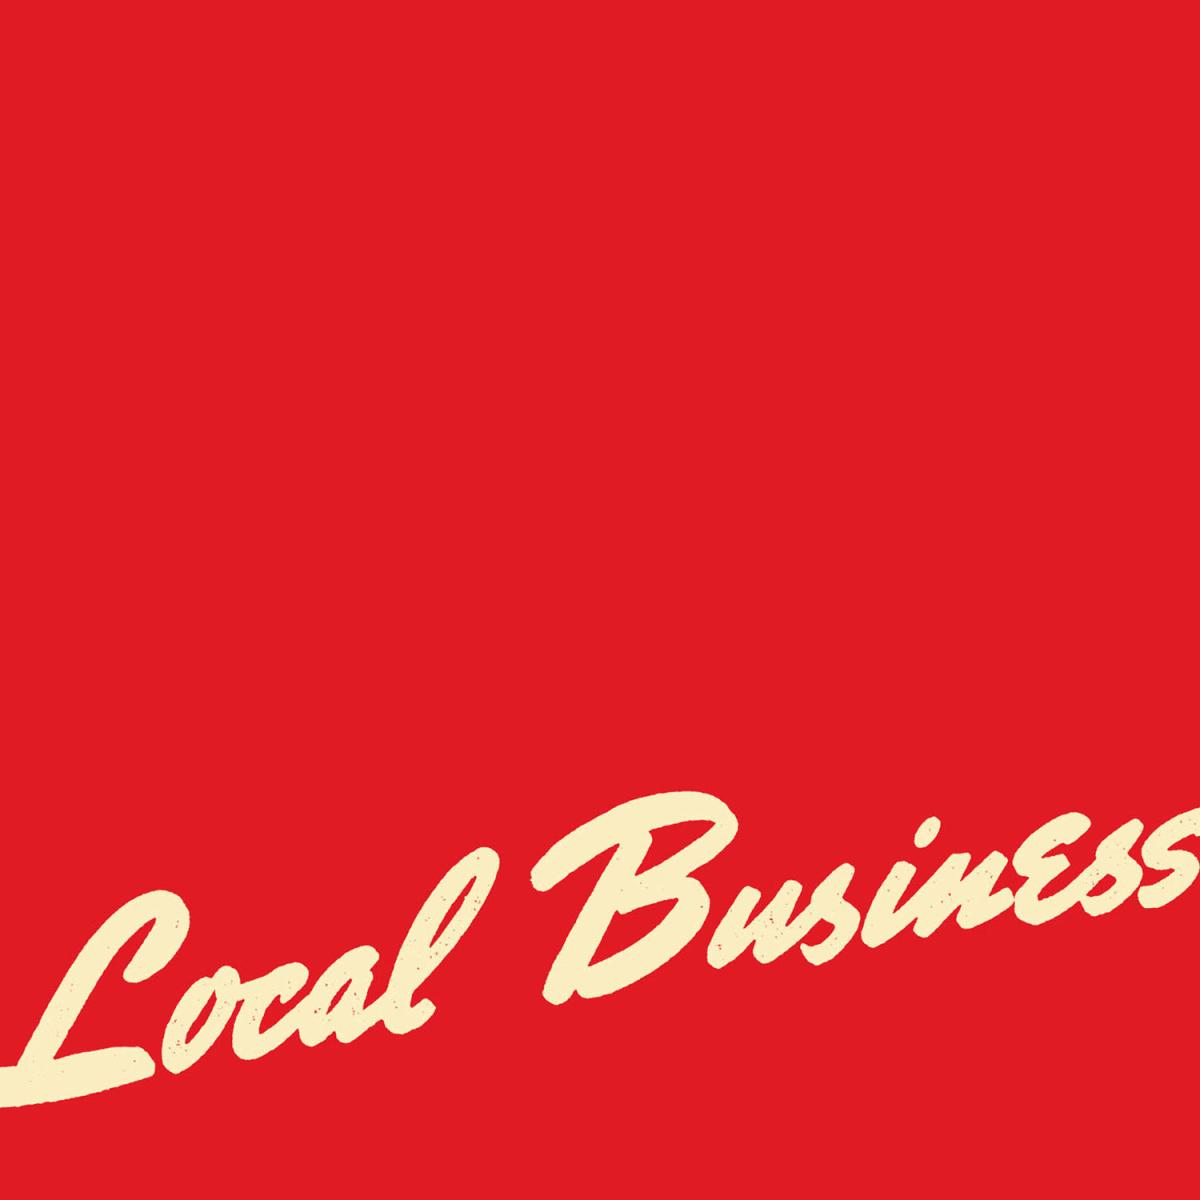 Titus Andronicus | Local Business | Vinyl